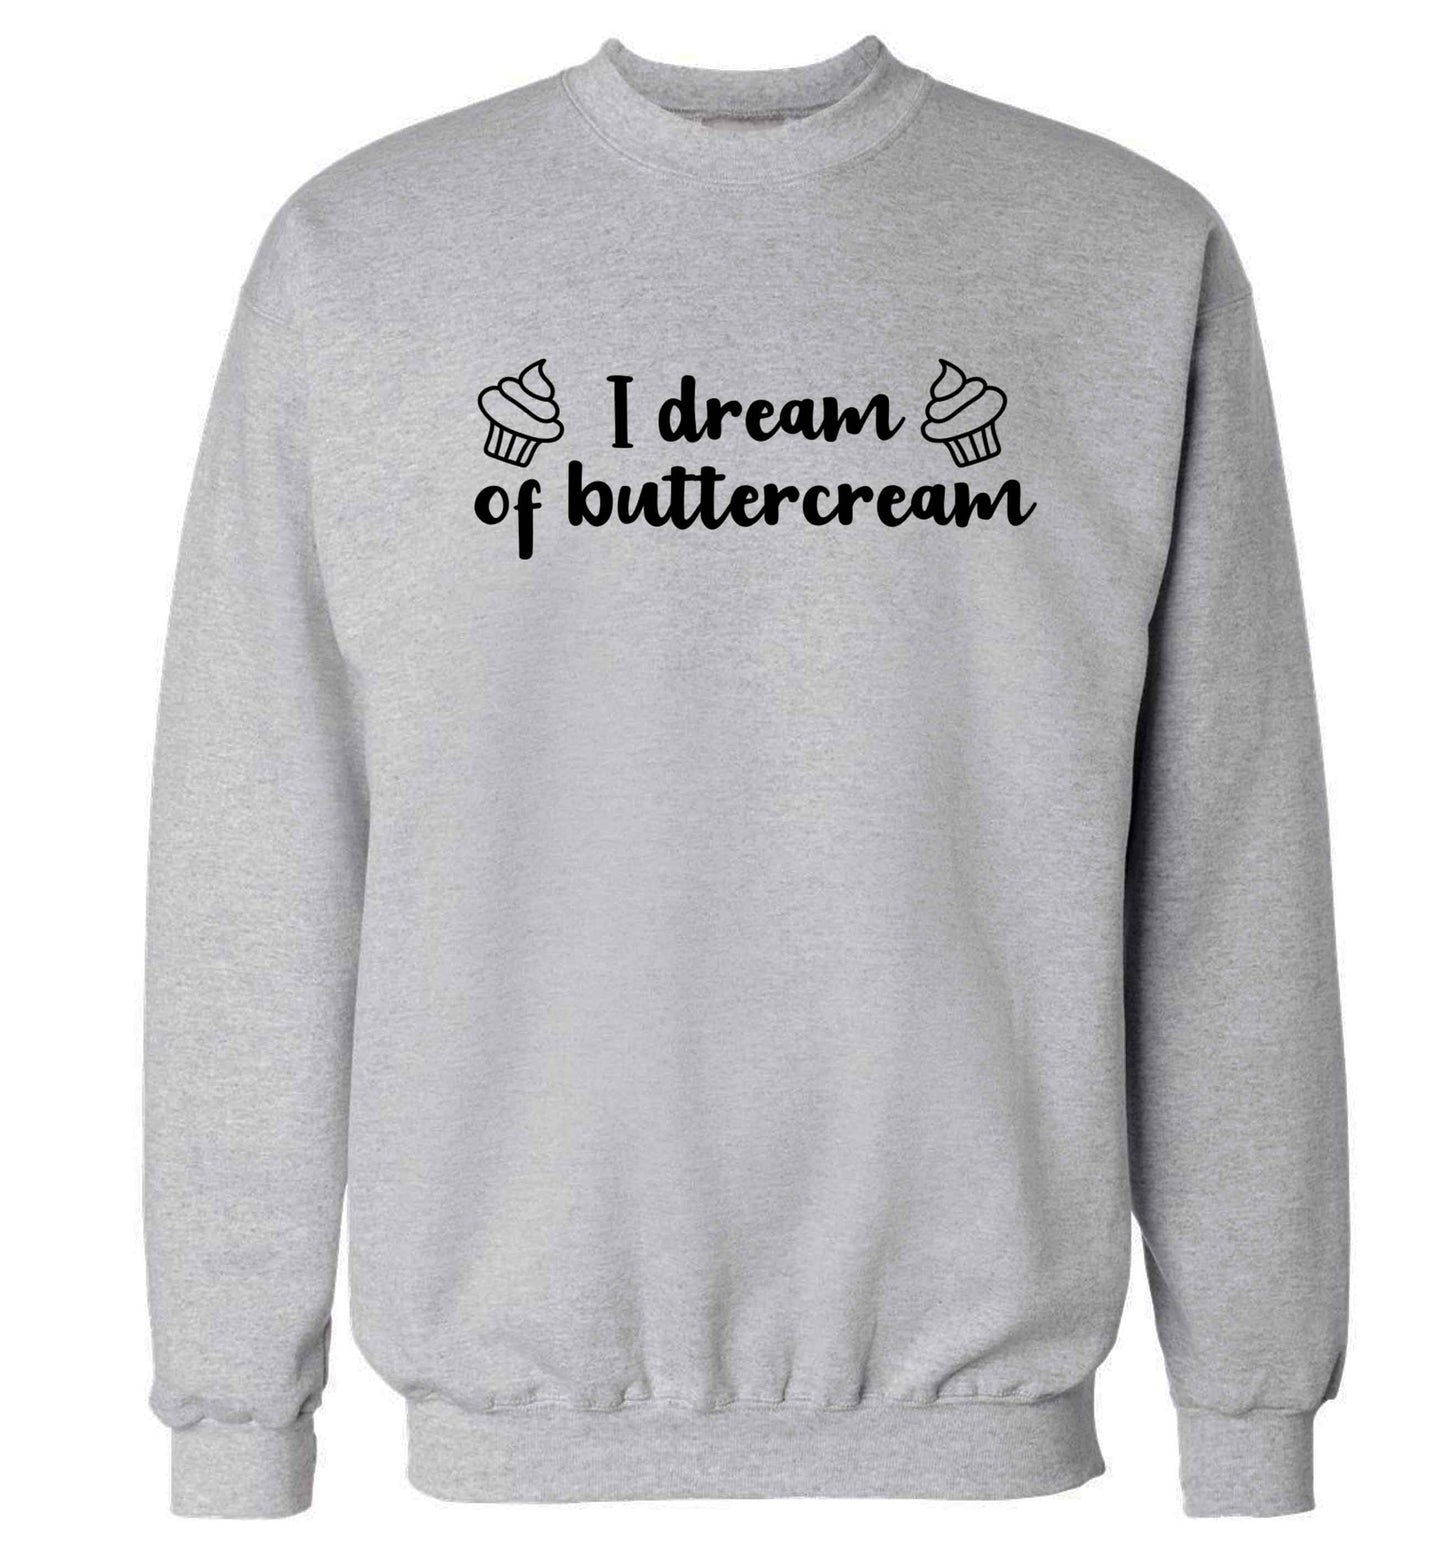 I dream of buttercream Adult's unisex grey Sweater 2XL